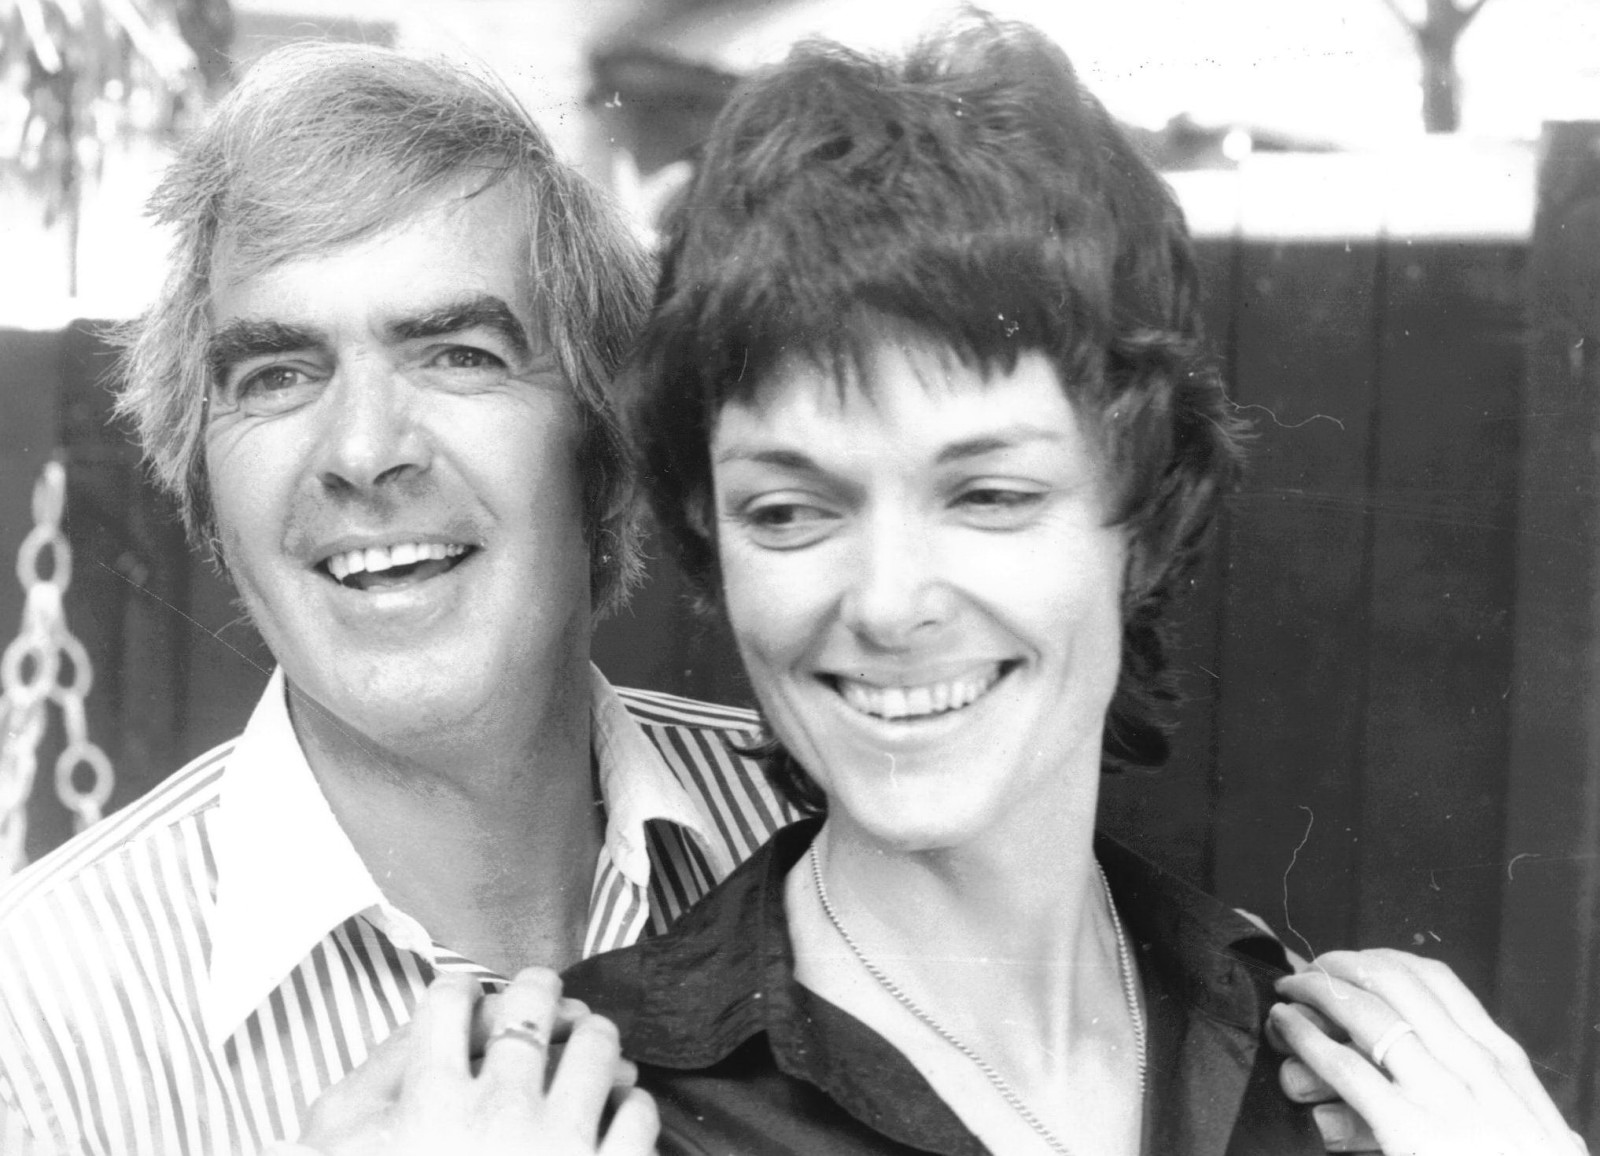 54_Publicity shot of John Cairney & Alannah O'Sullivan for World Tour c1984.jpg